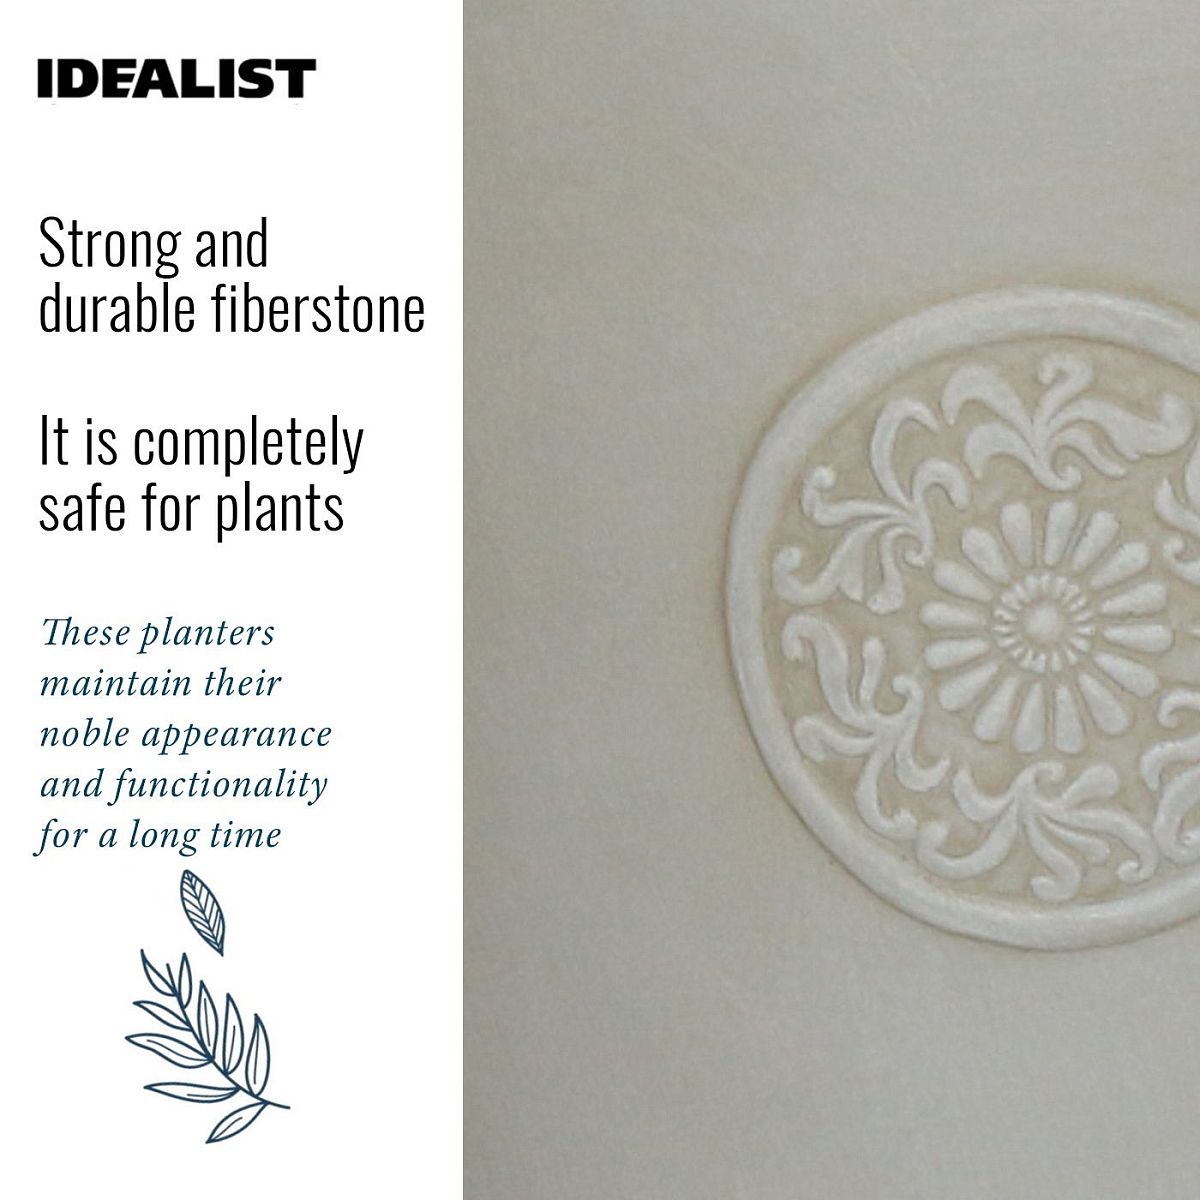 IDEALIST Lite Rustic Style Rolled Rim Wide Vase Outdoor Planter